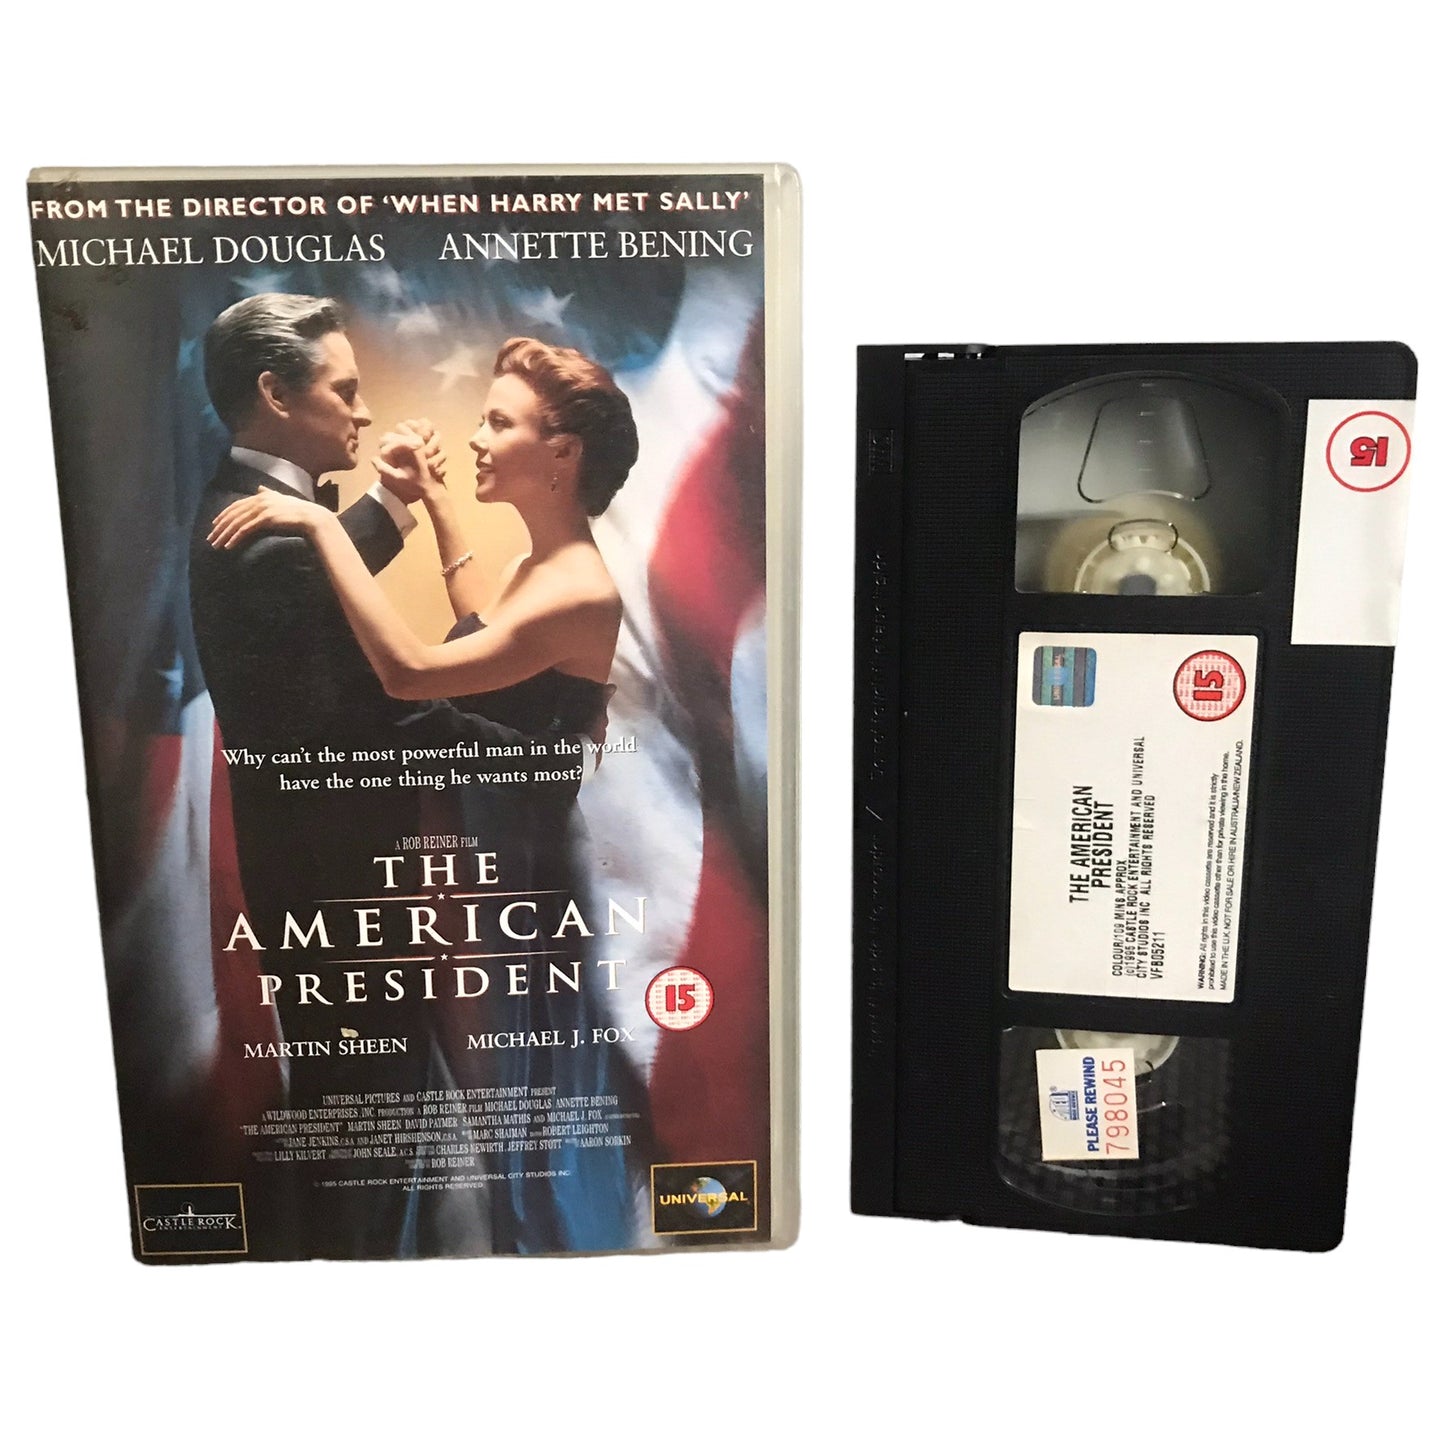 The America President - Michael Douglas - Universal - Large Box - Pal - VHS-